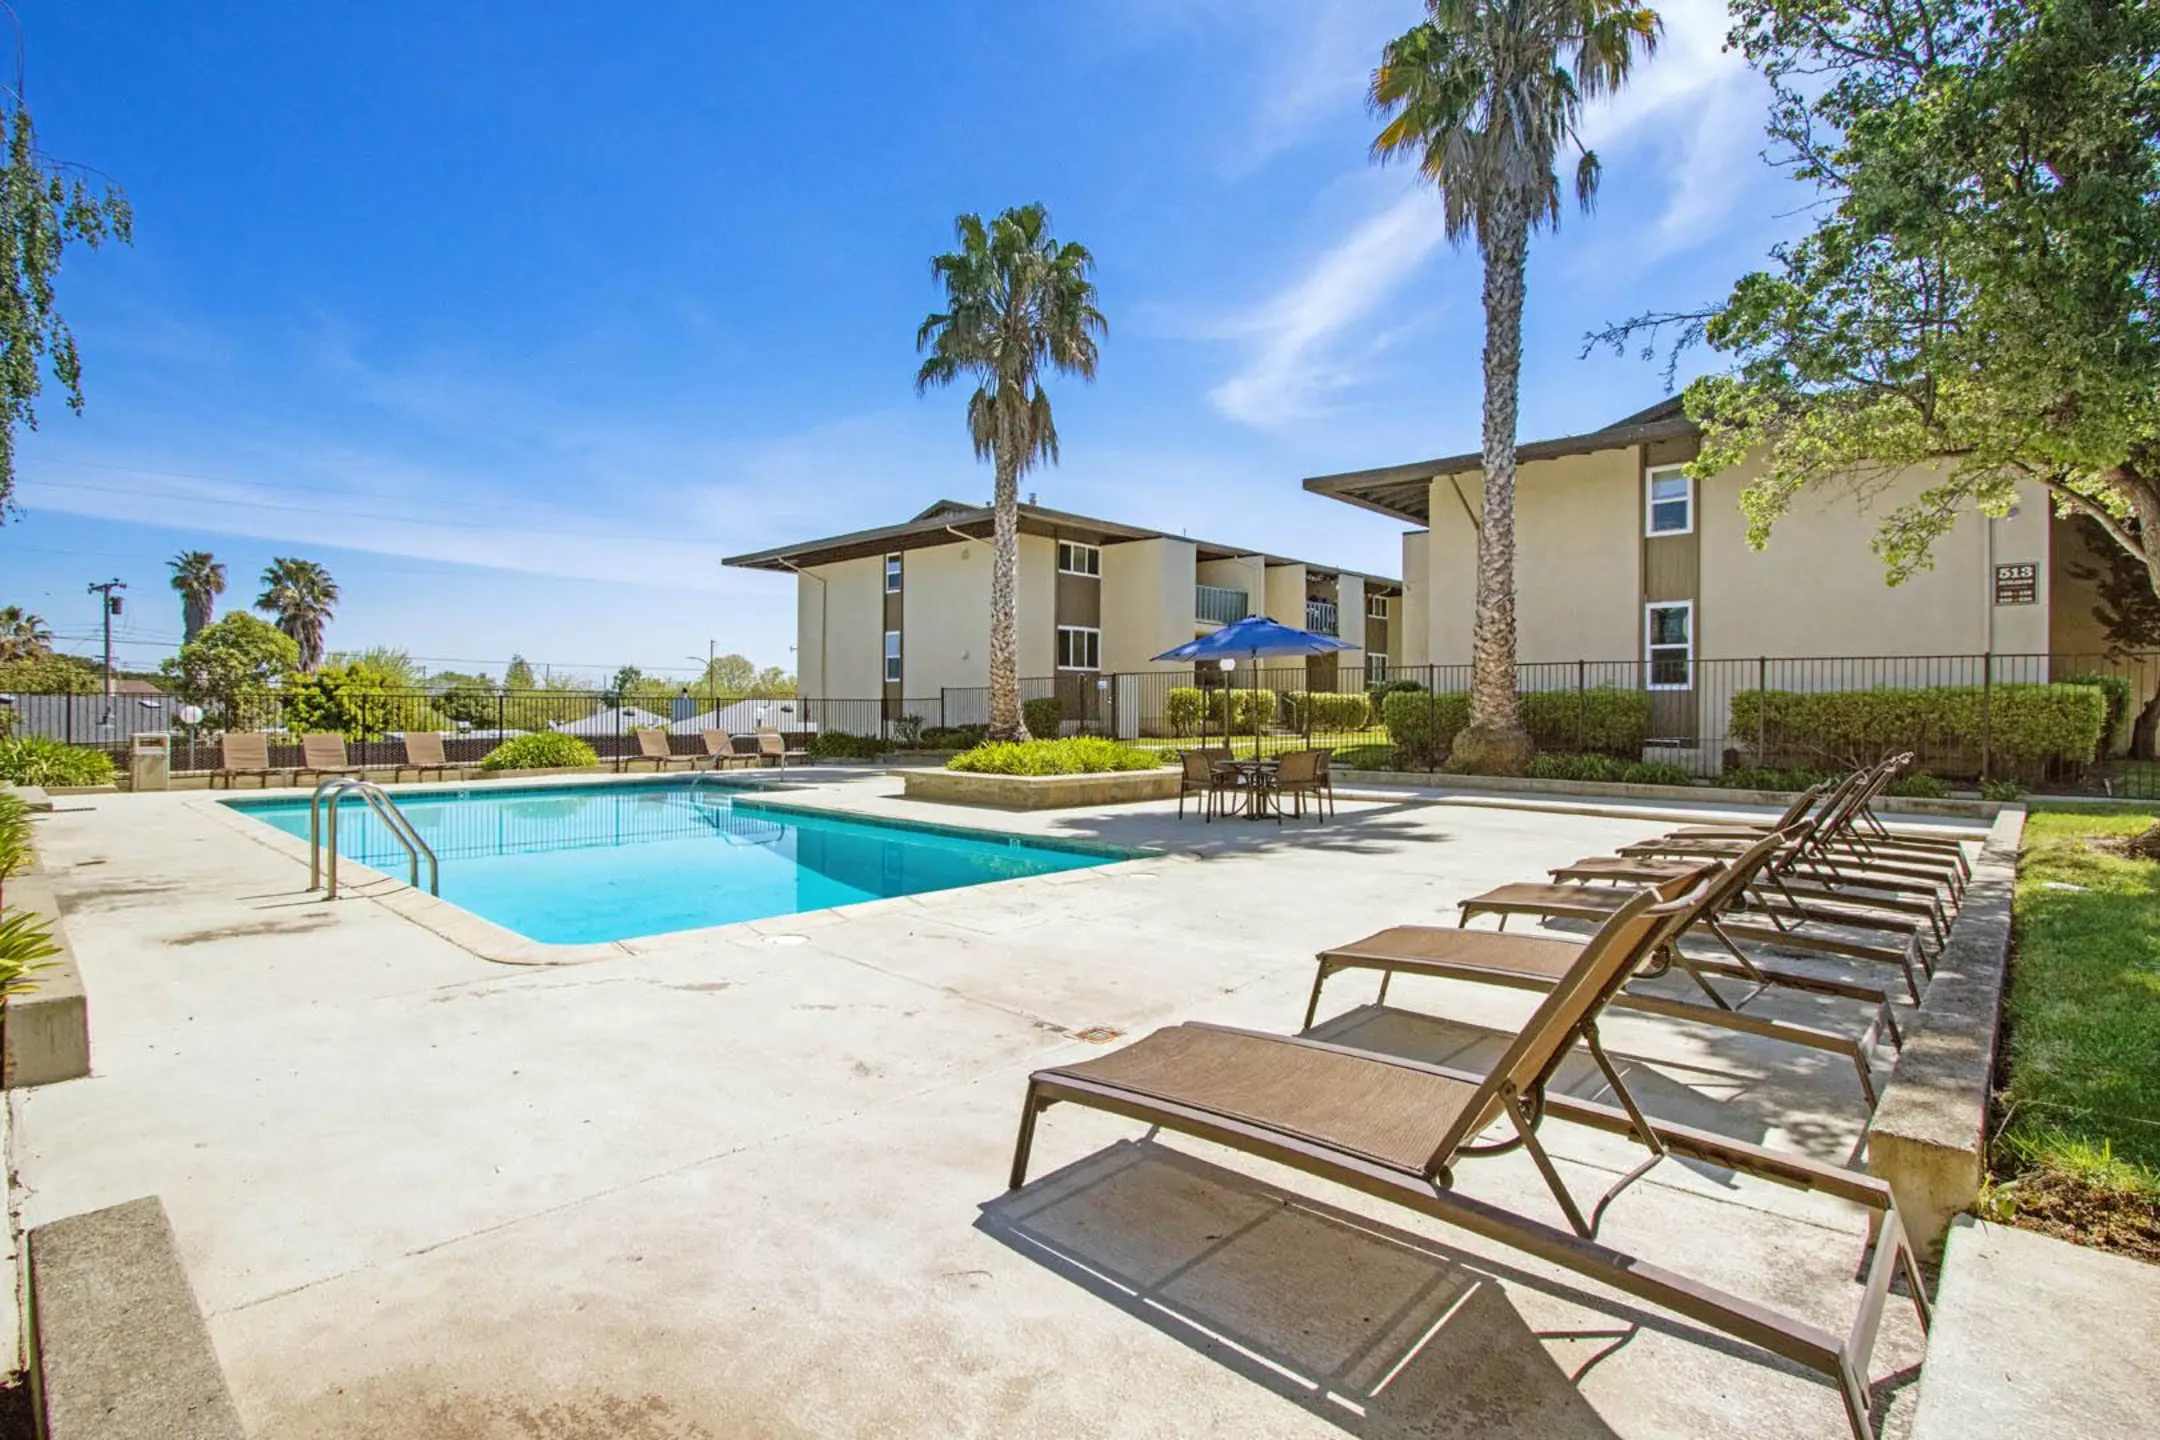 Pool - Crestview Apartments - Belmont, CA